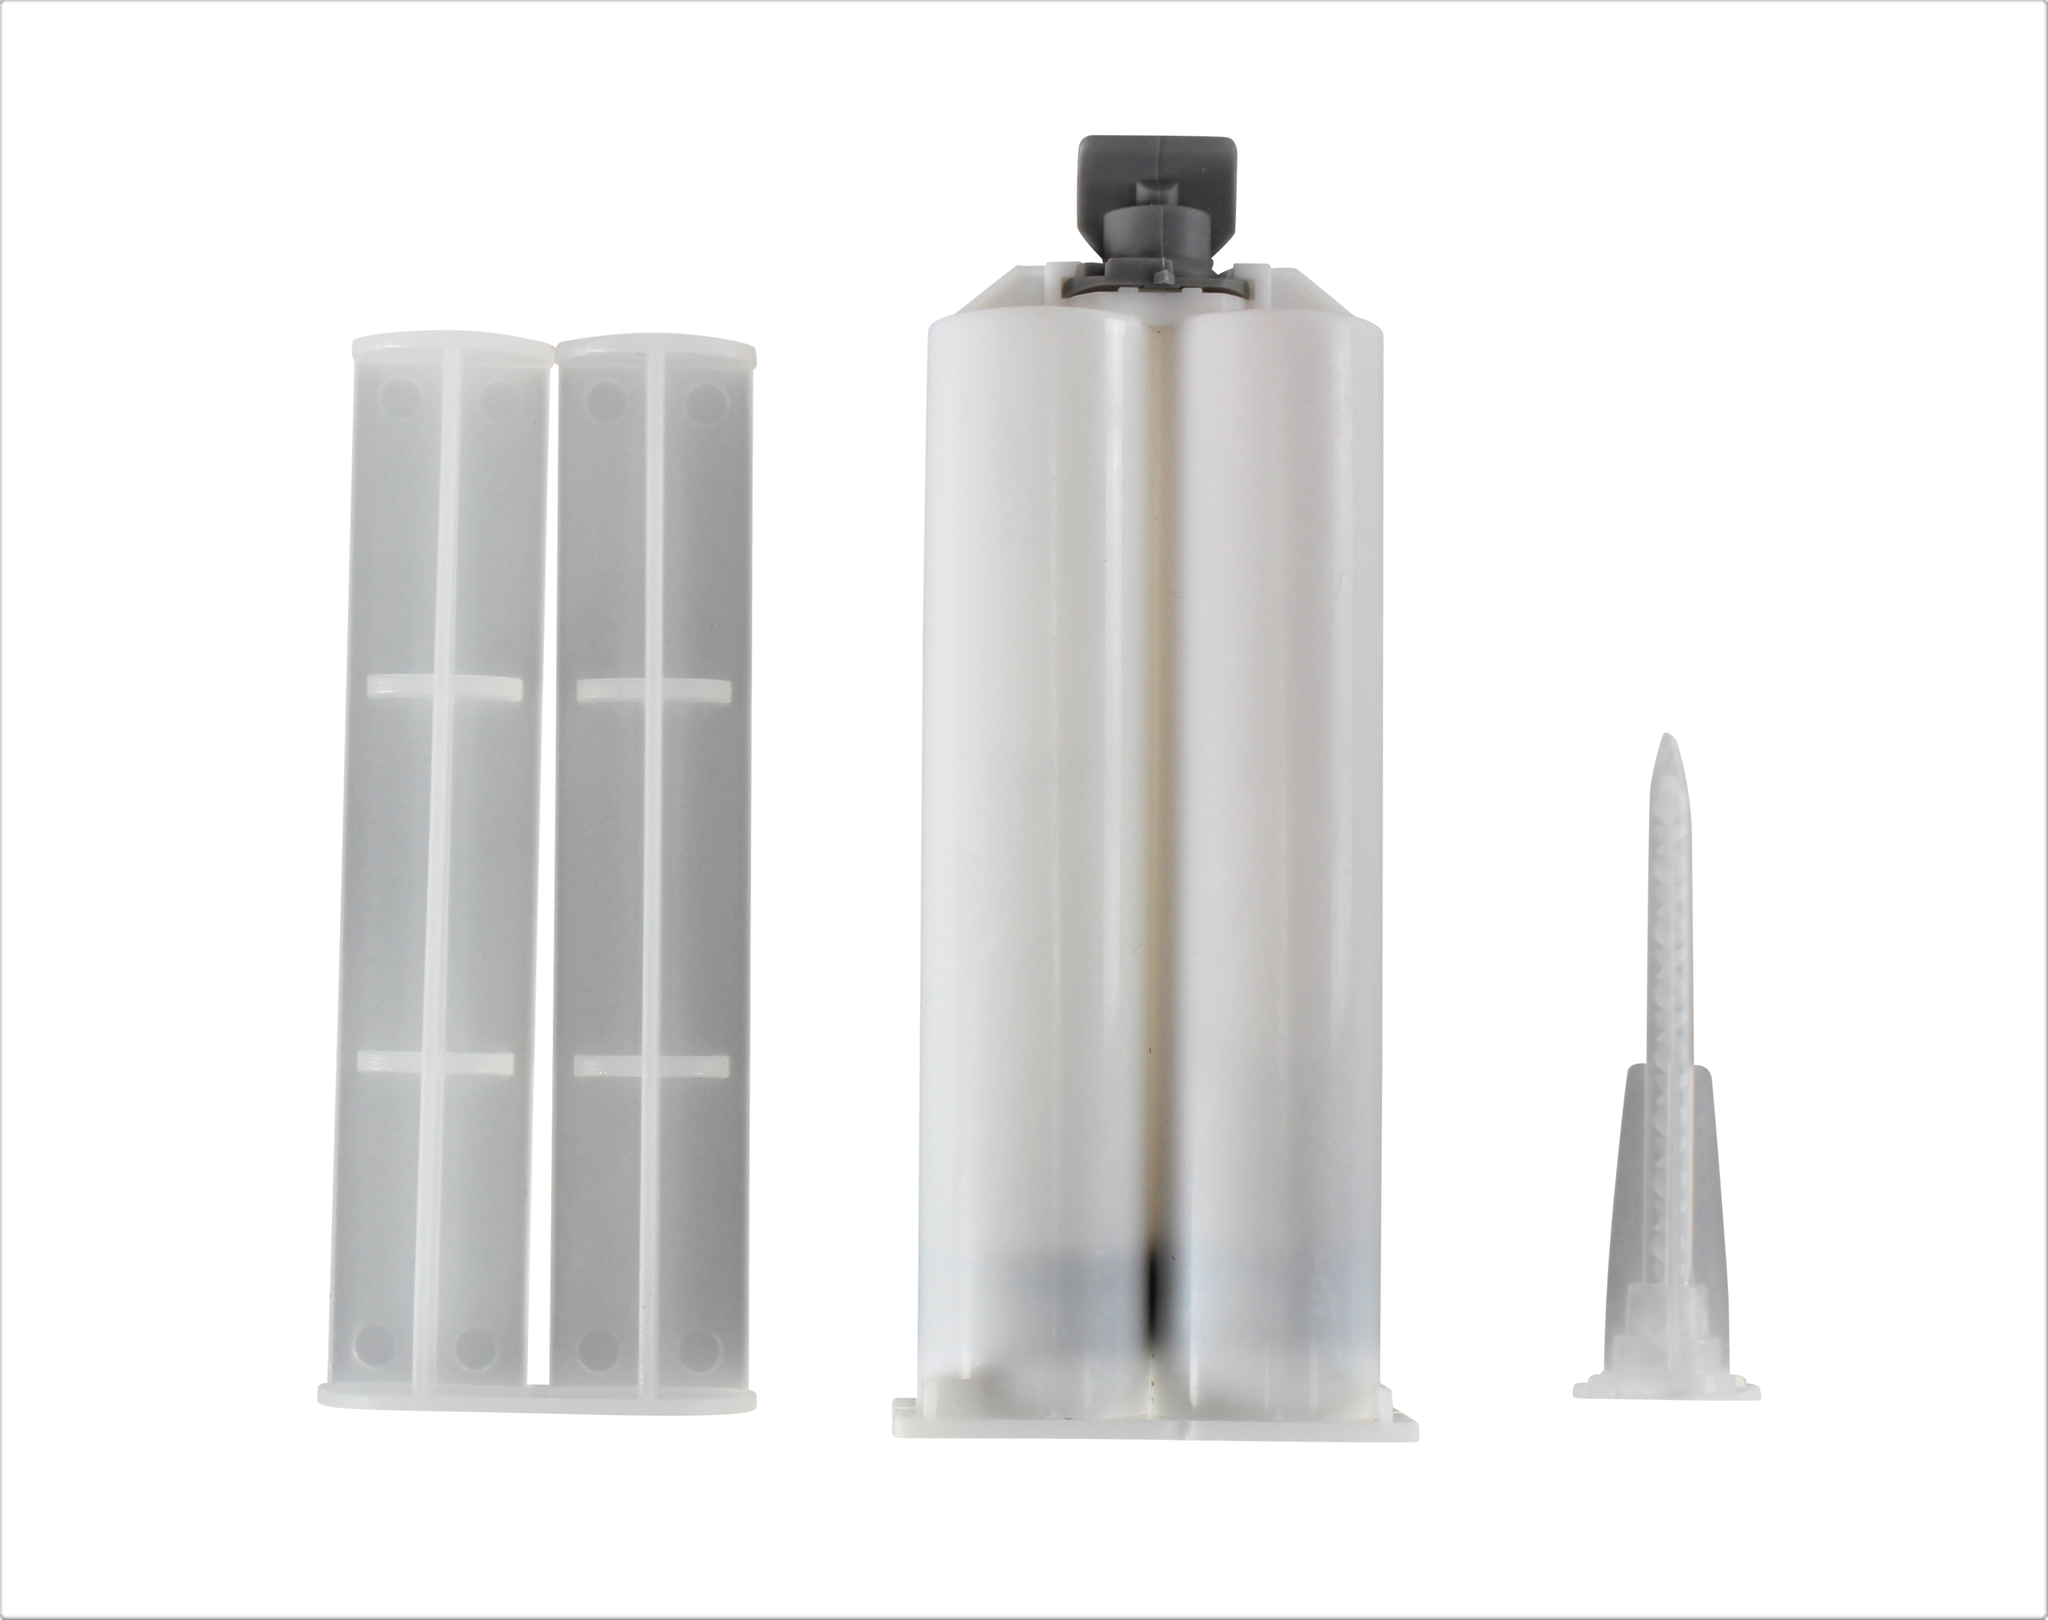 vermomming Voor type Strippen Snel uithardende transparante epoxy kit - 50 ml tube met applicator -  Drainhandel